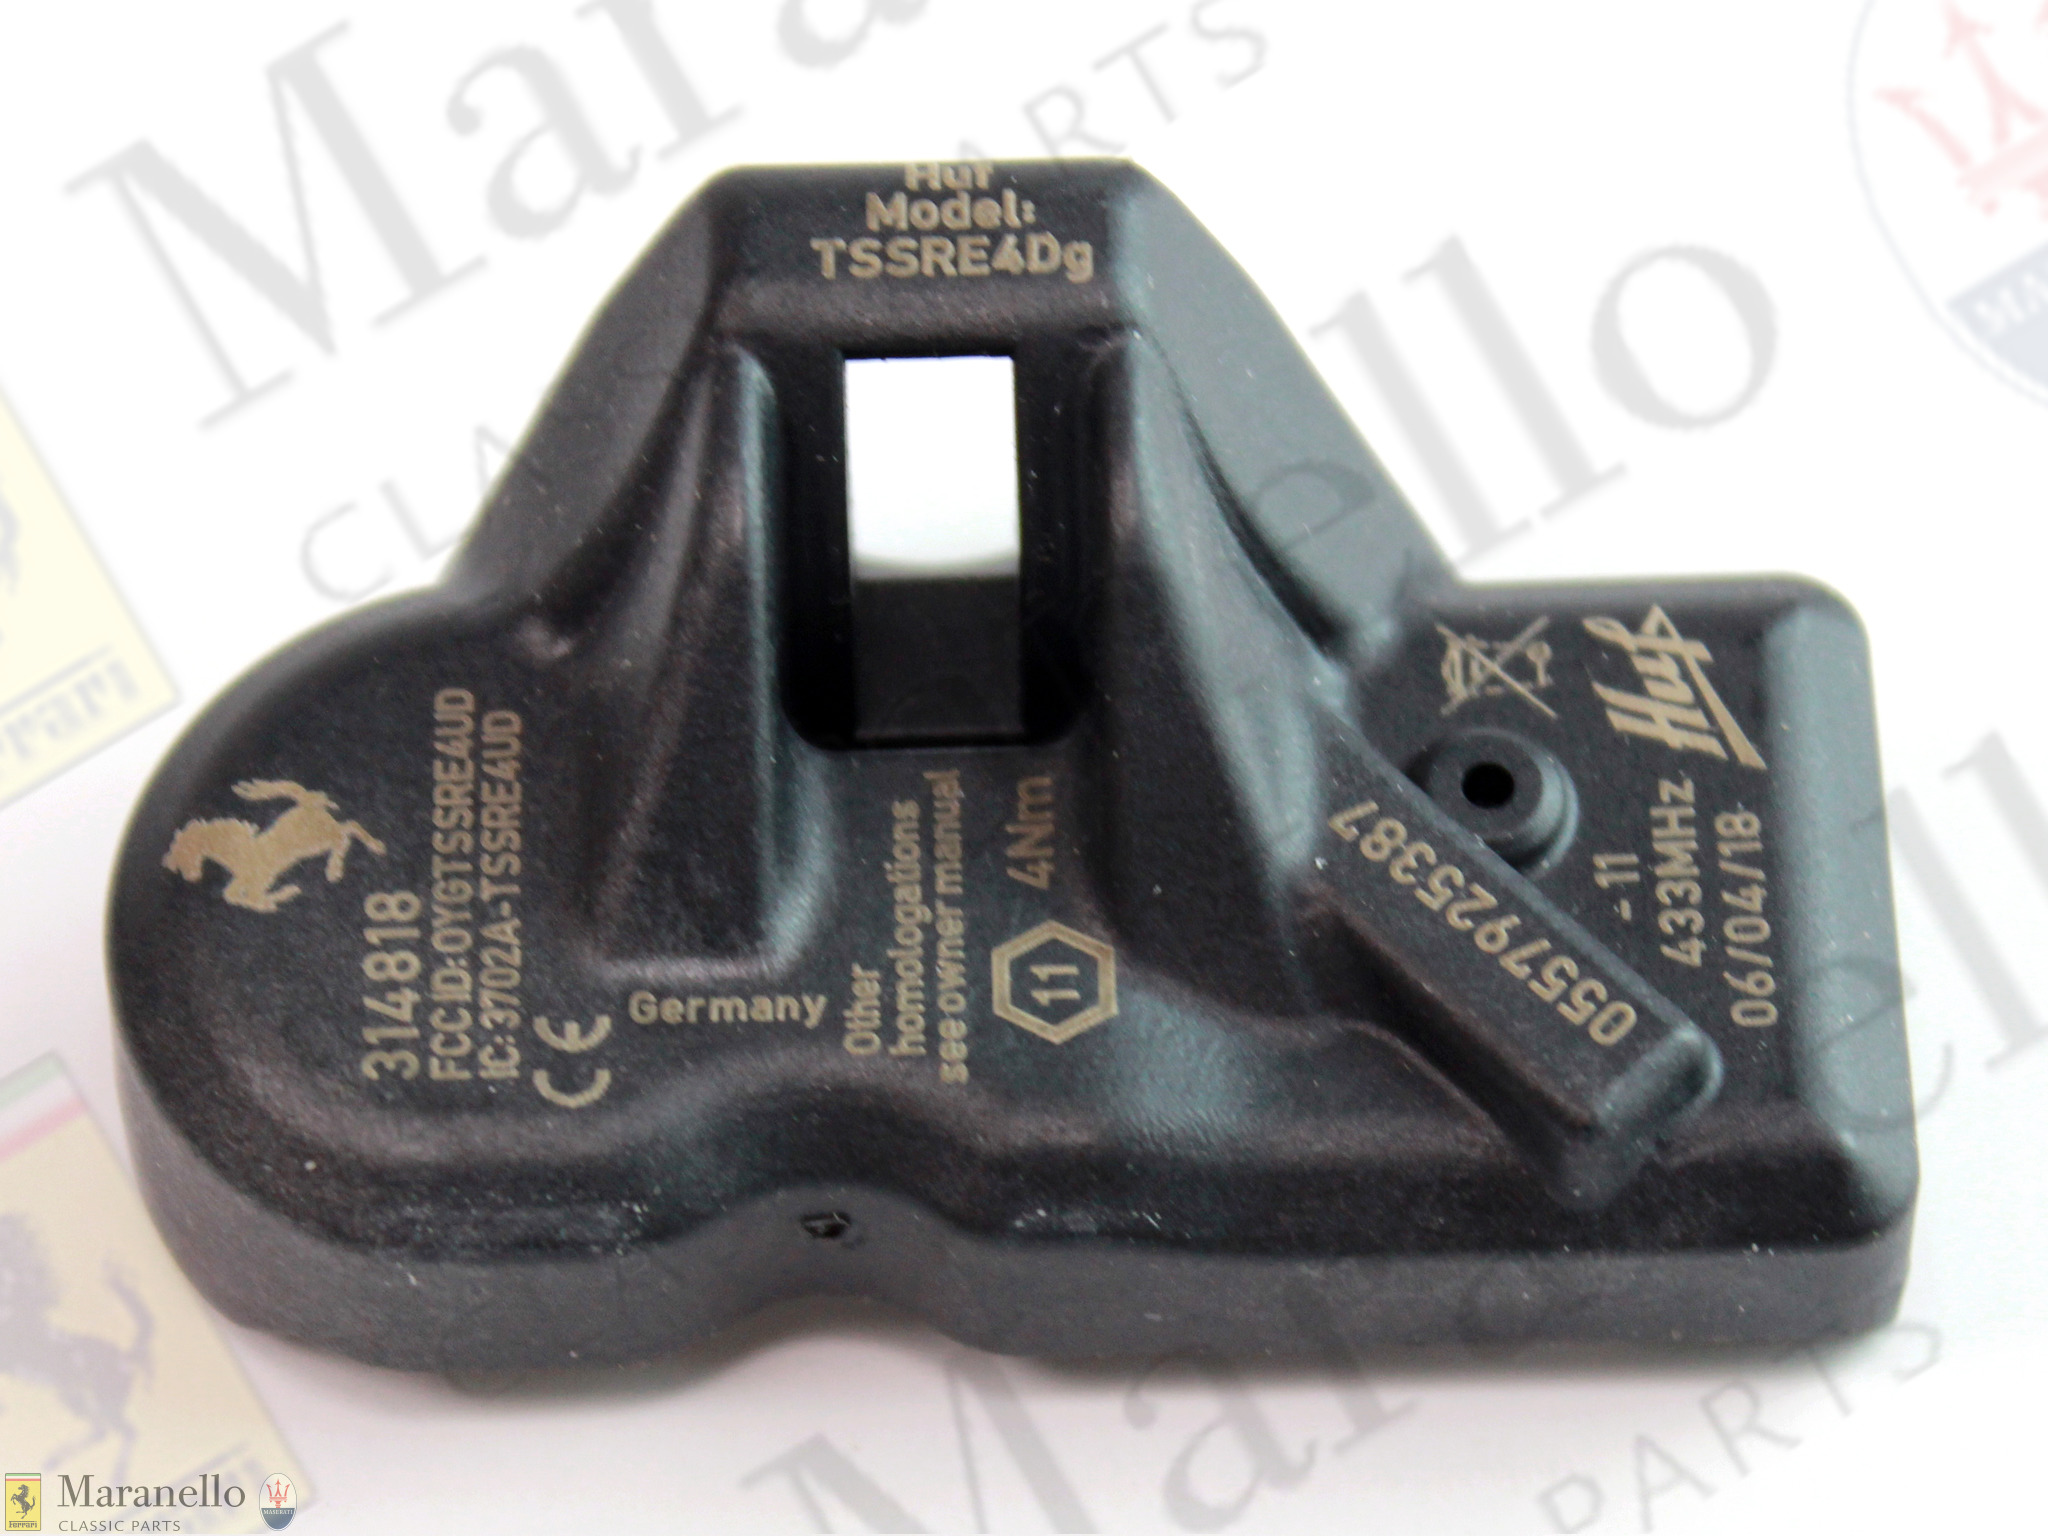 Ferrari part 314818 - Tpms Wheel Sensor Gen 3.8 | Maranello 